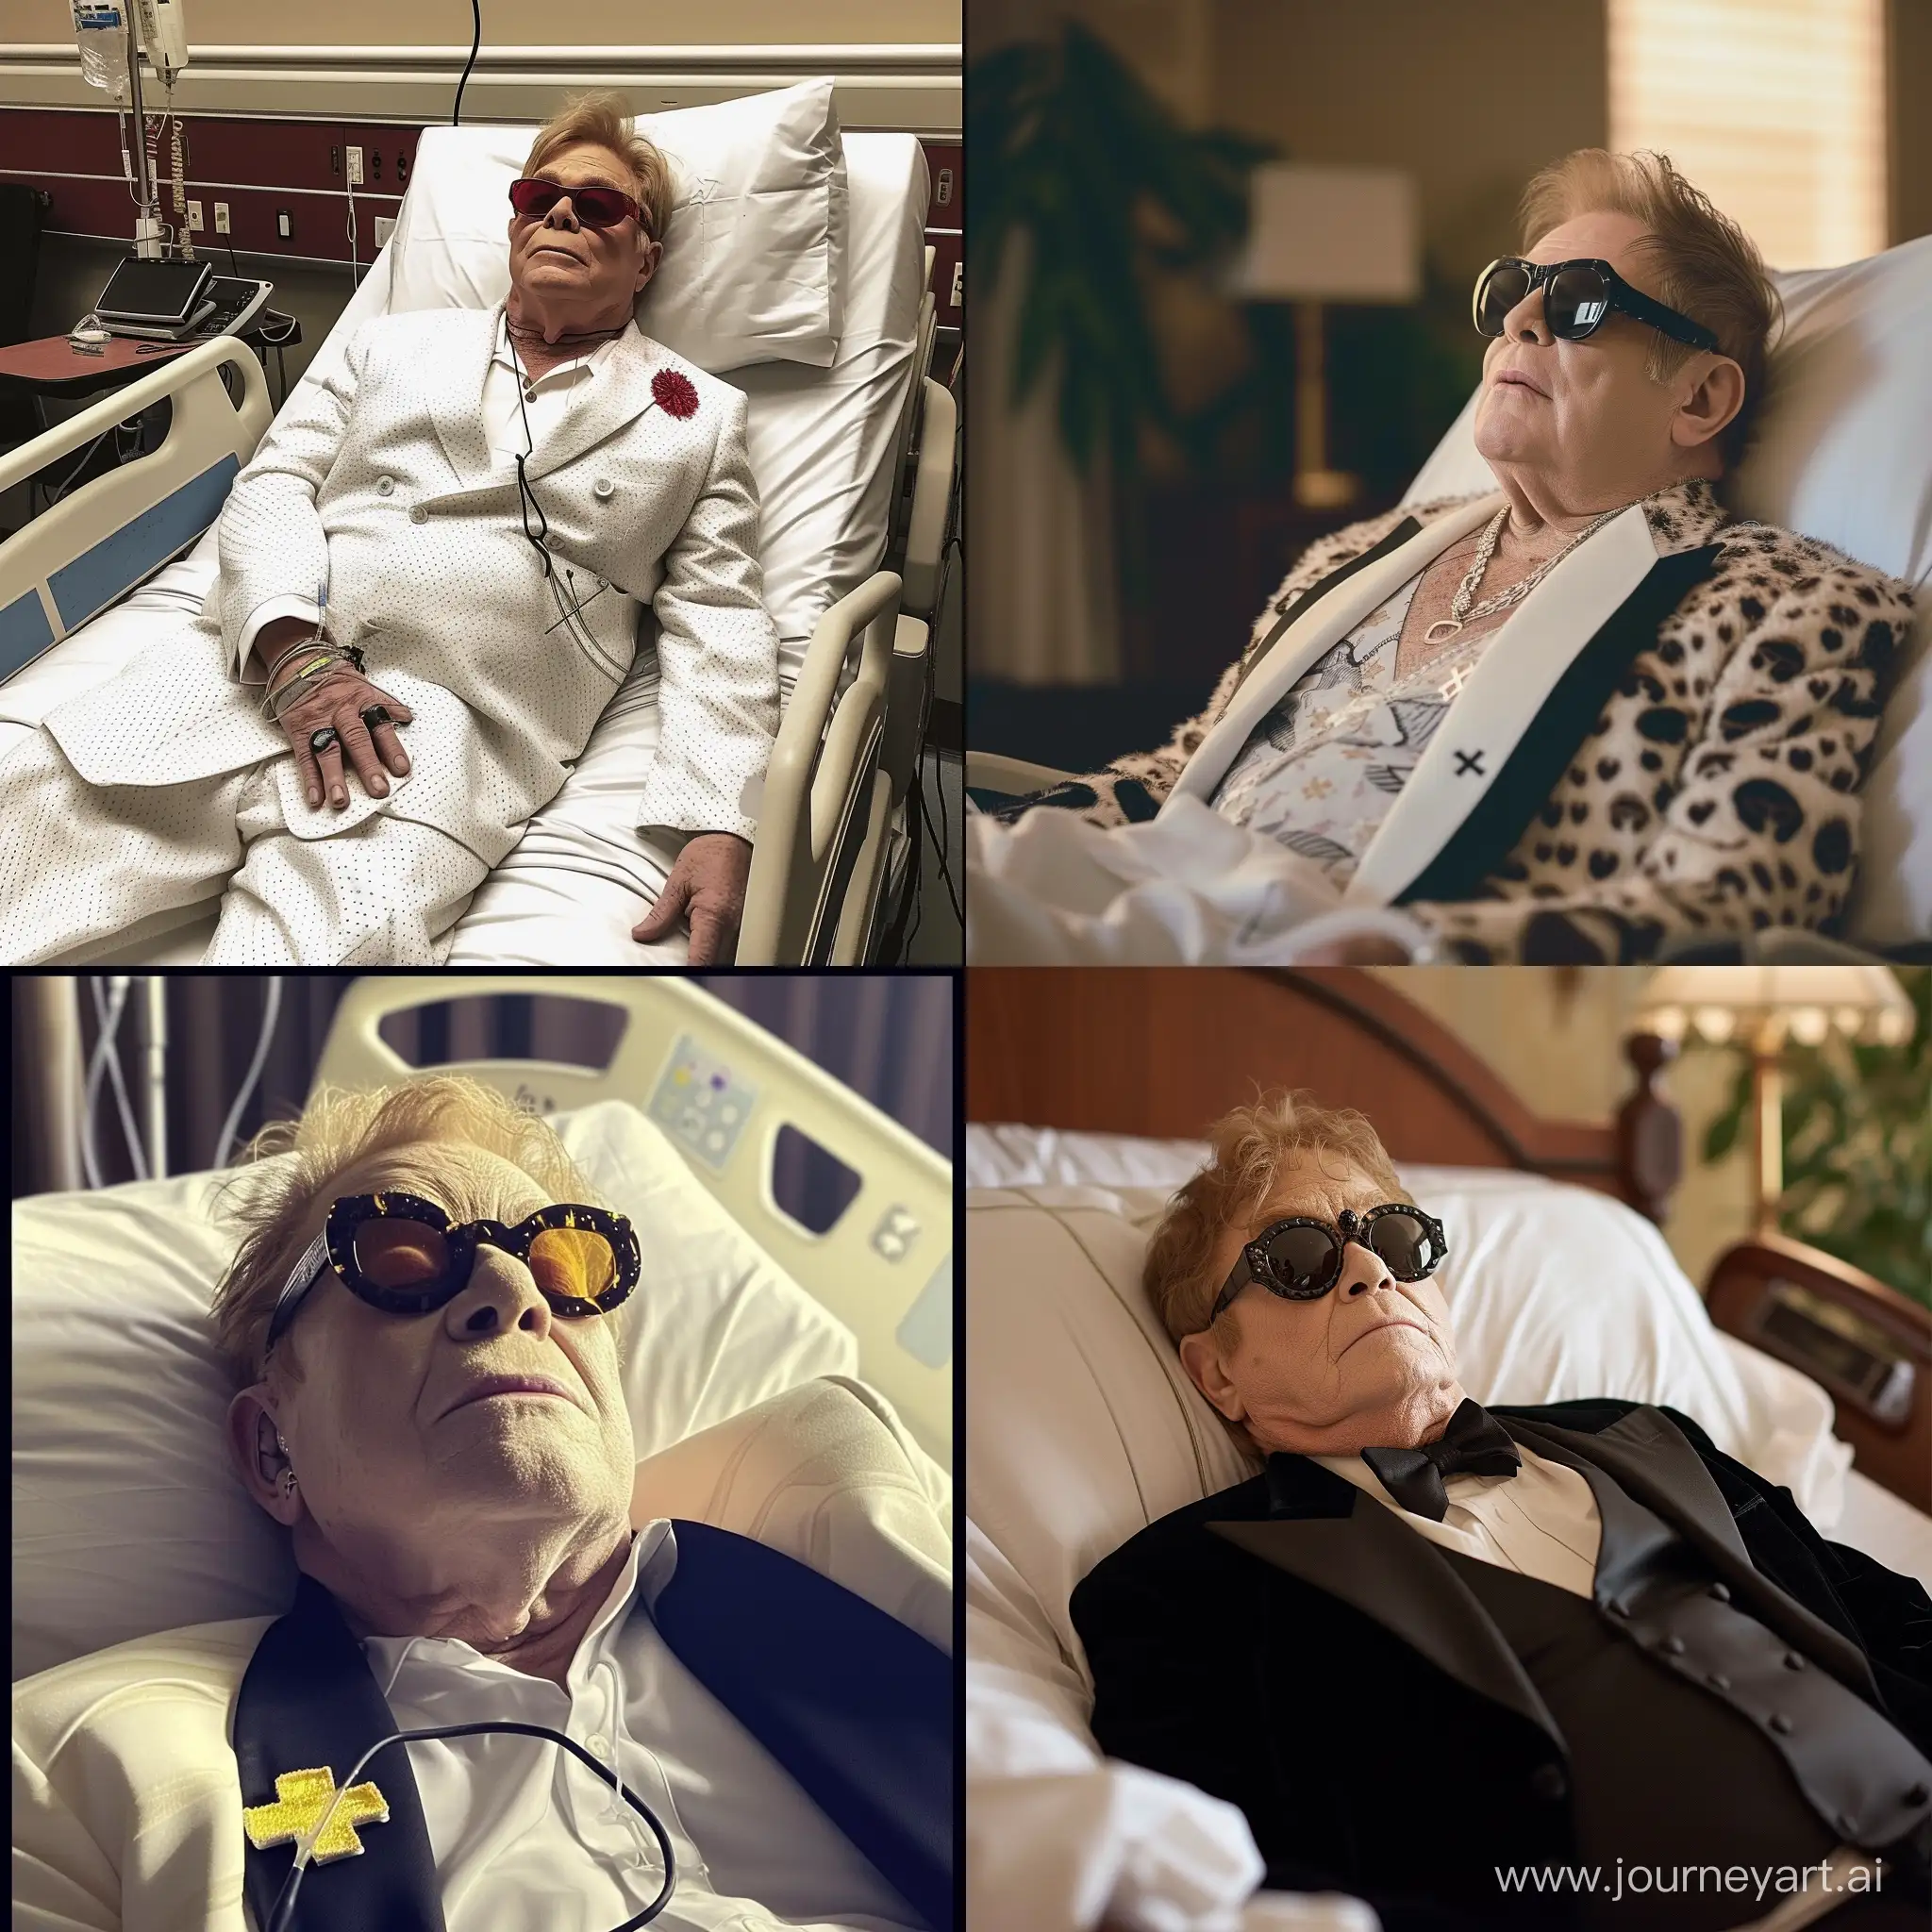 Elton John is in the hospital